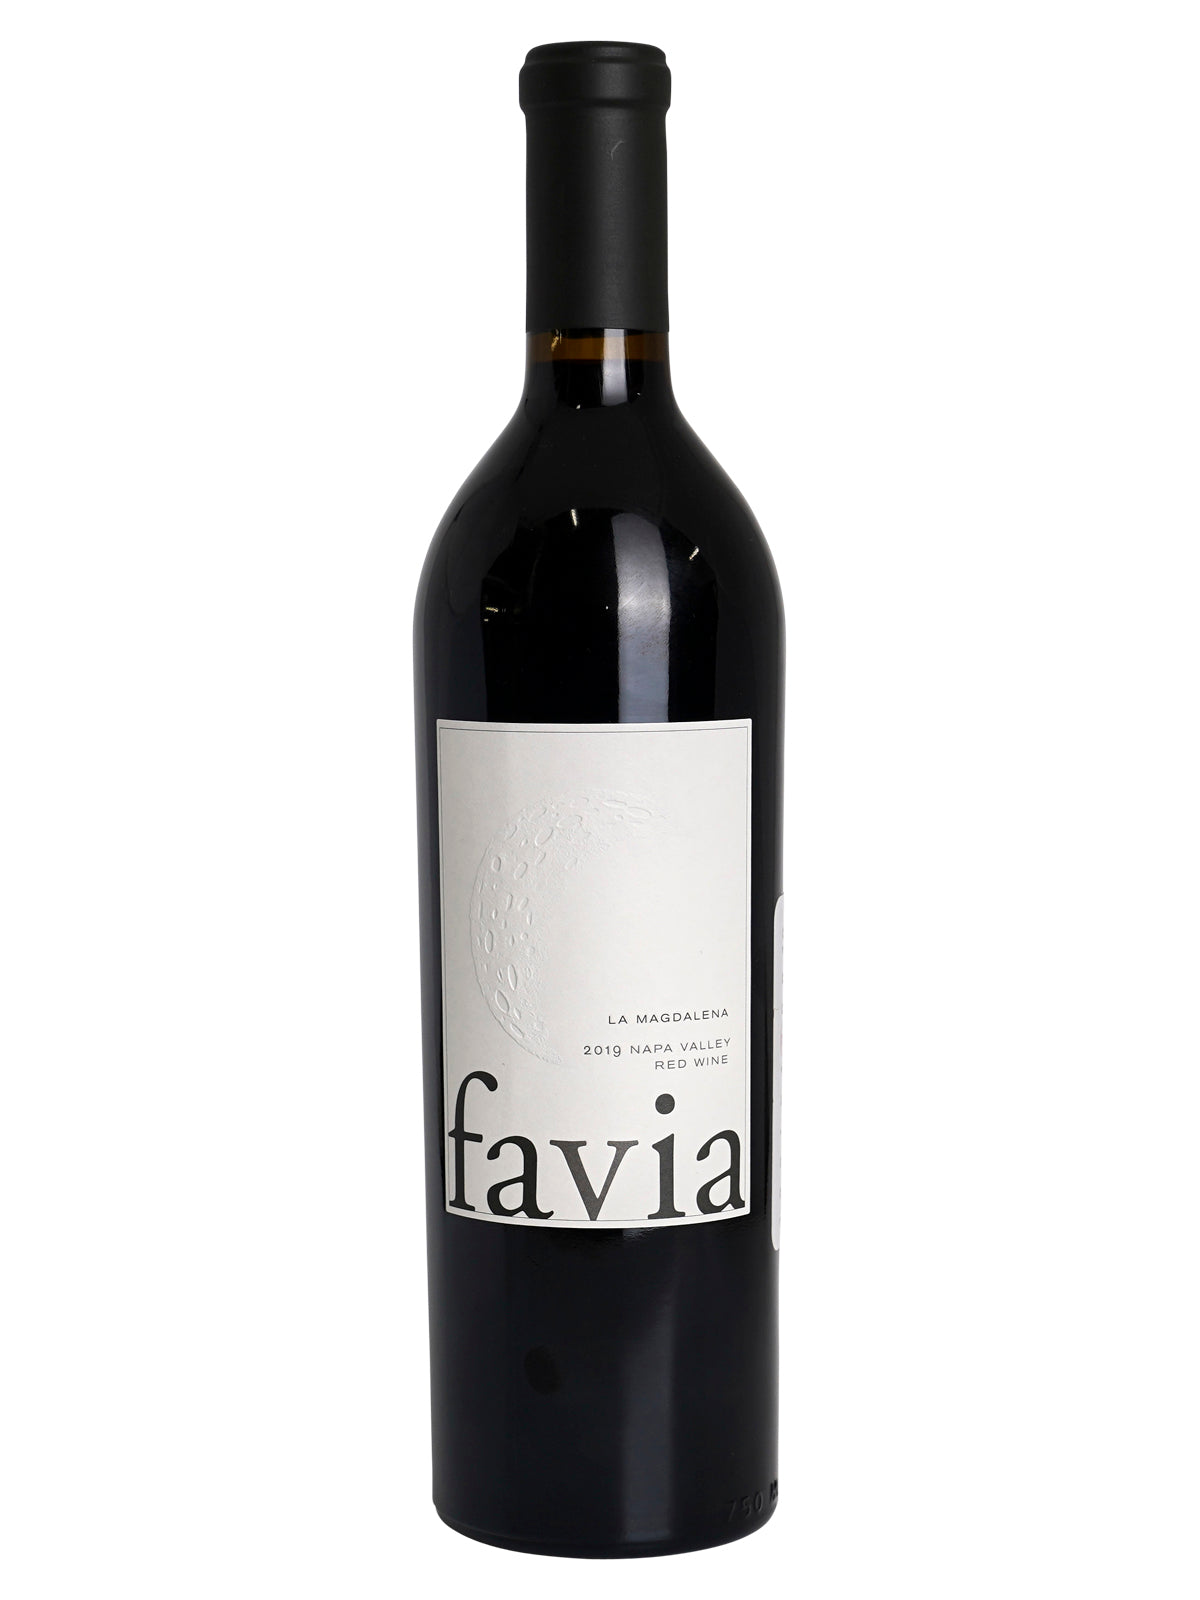 *7R* 2019 Favia "La Magdelena" Red Wine (Napa Valley, CA)